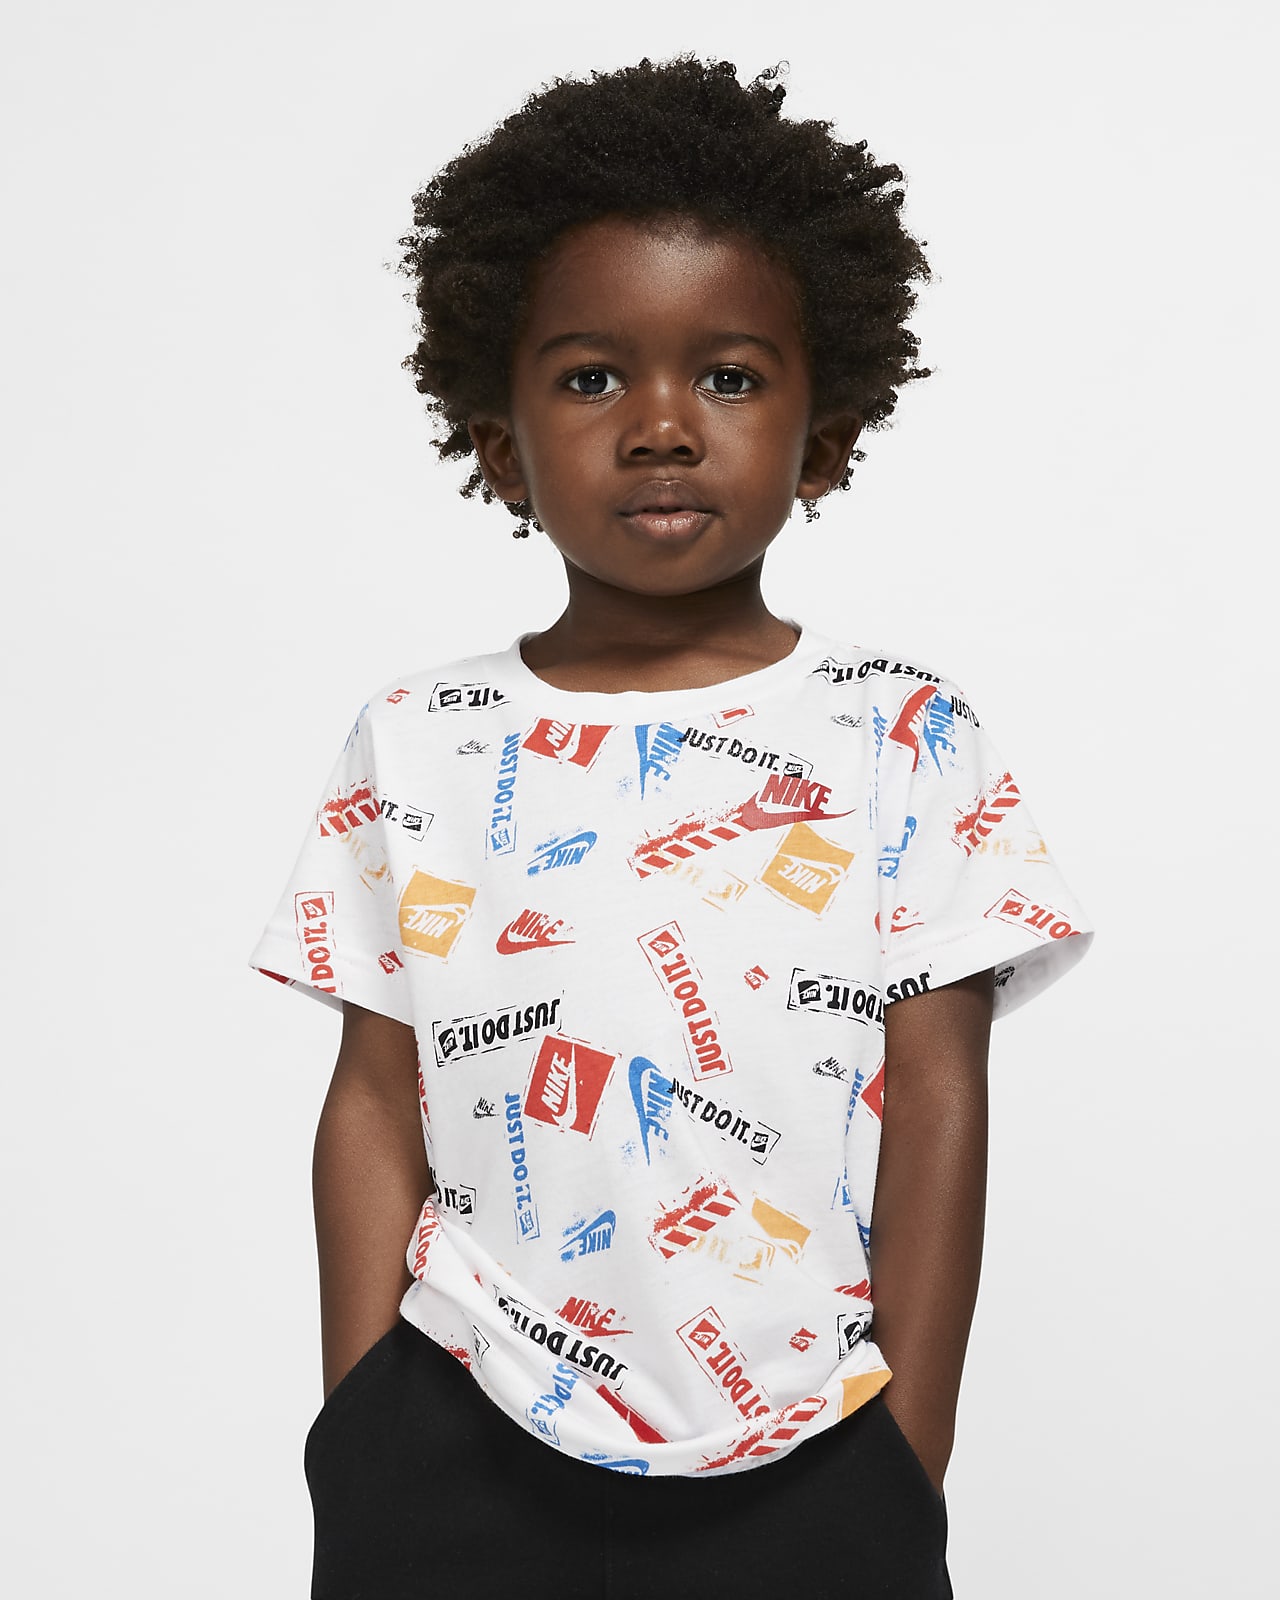 Nike 婴童印花T恤